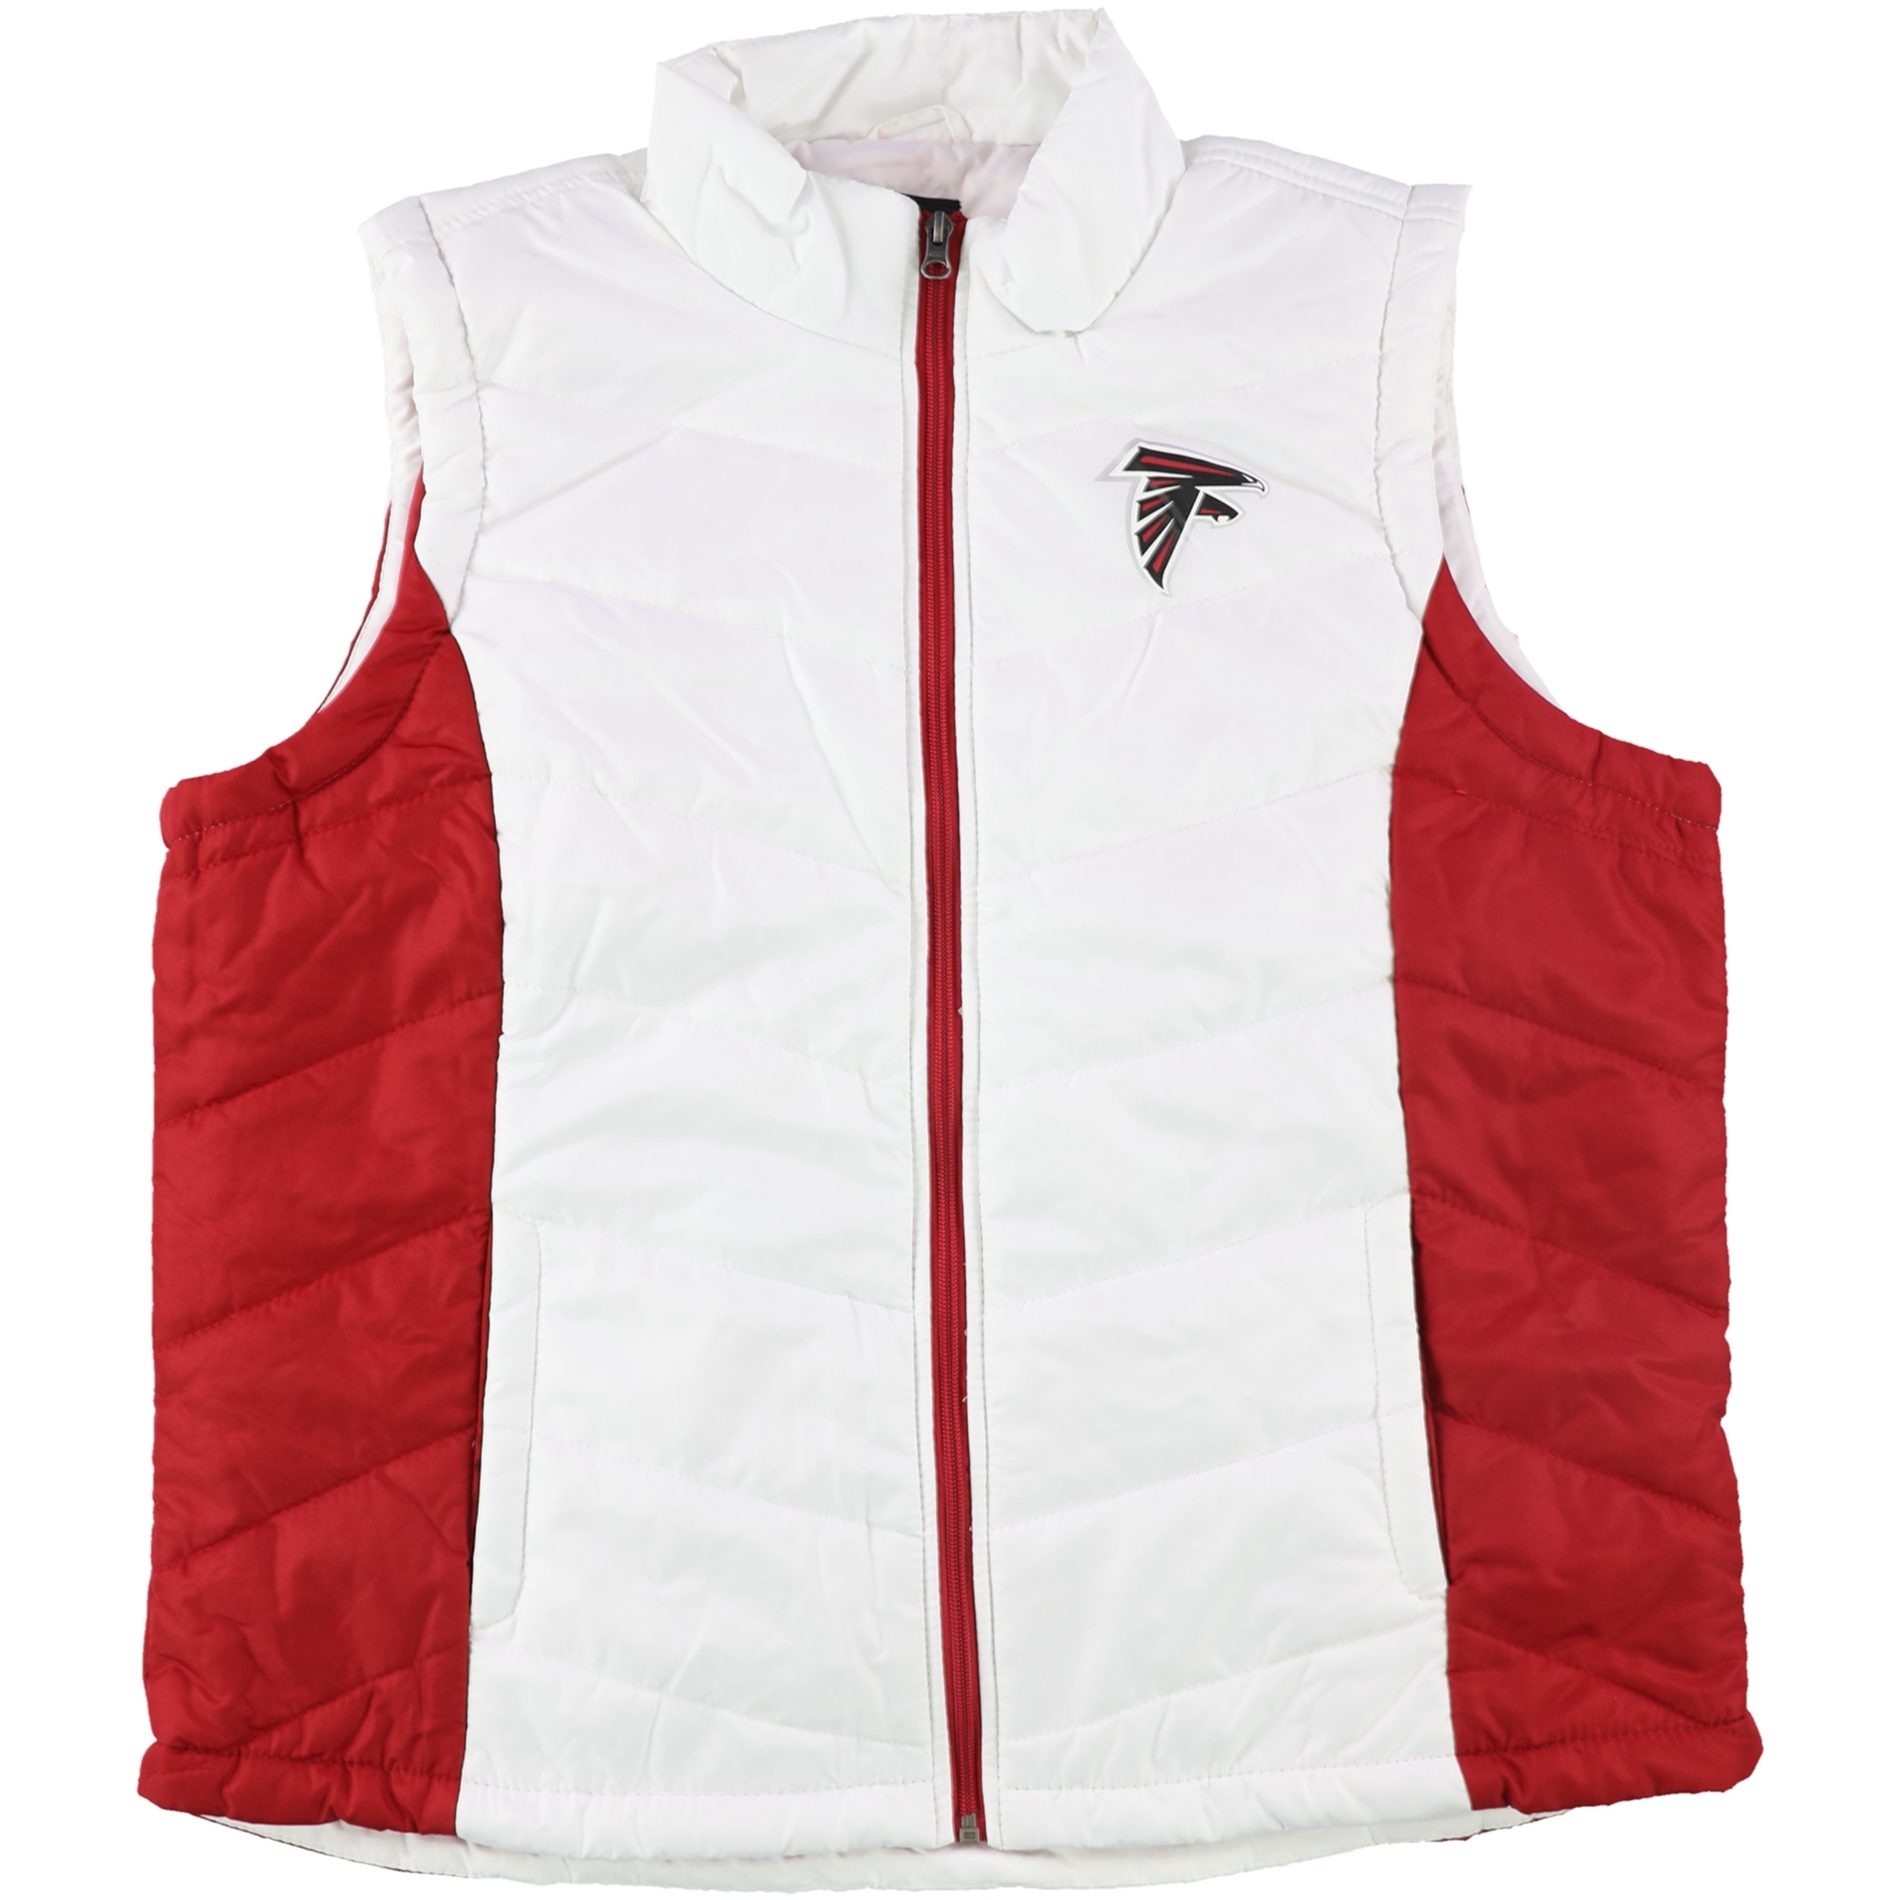 Nfl Womens Atlanta Falcons Outerwear Vest